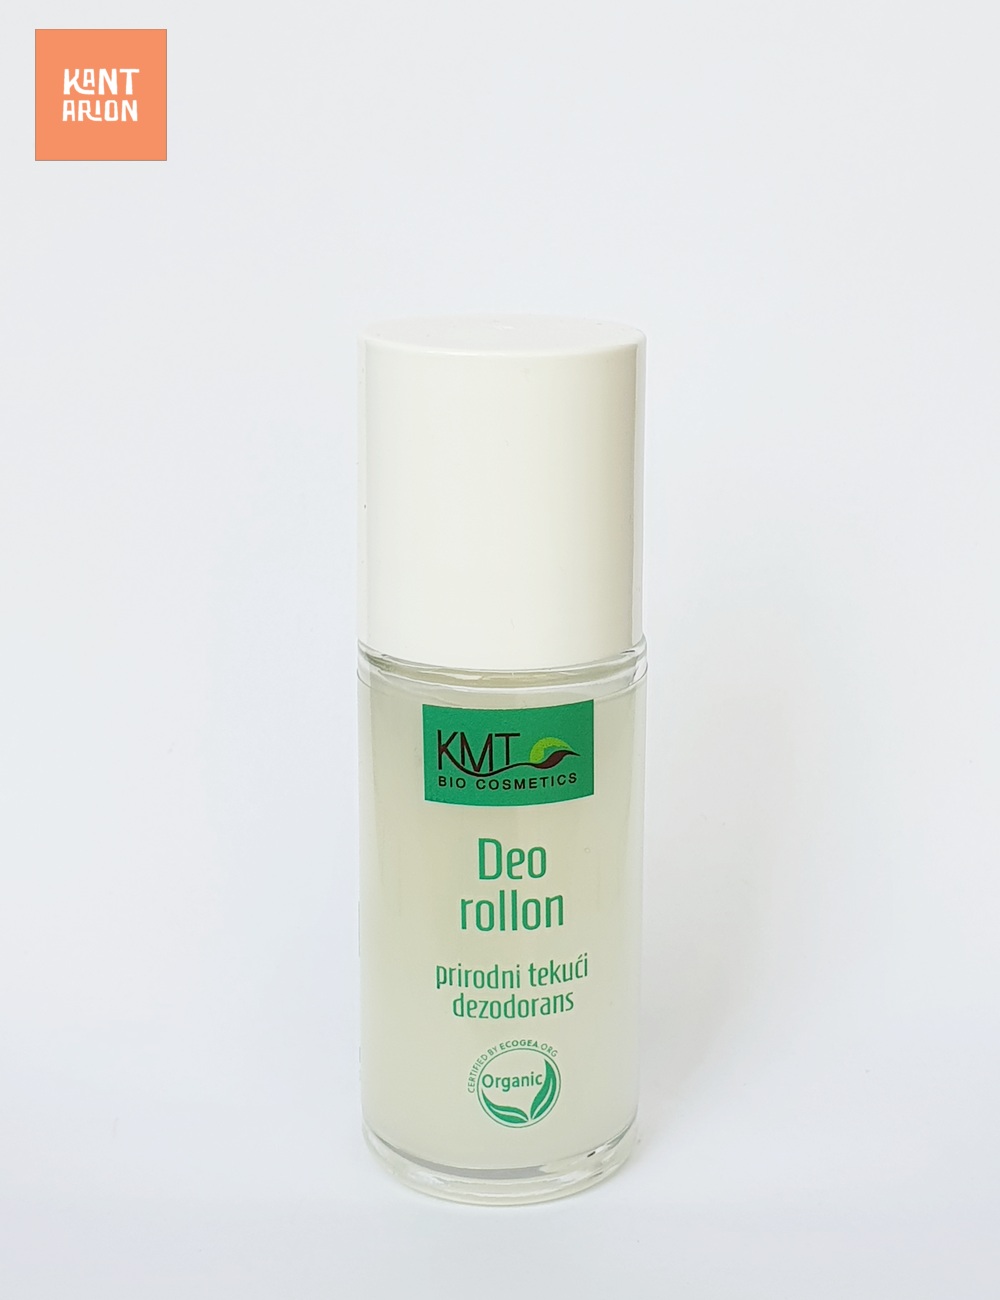 KMT BIO COSMETICS – Deo Rollon prirodni tekući dezodorans